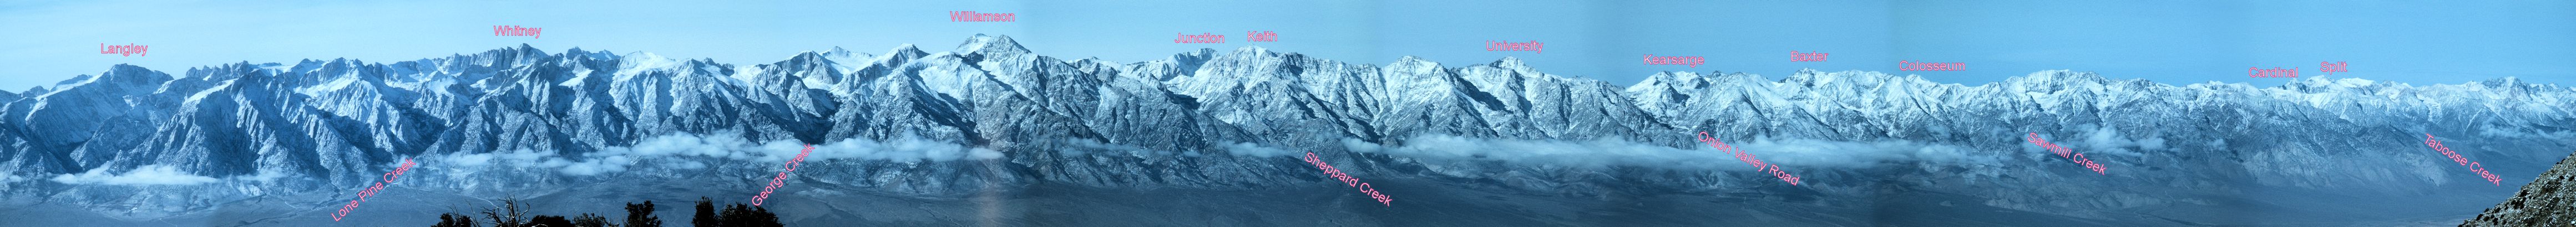 Sierra Nevada panorama from Mount Inyo